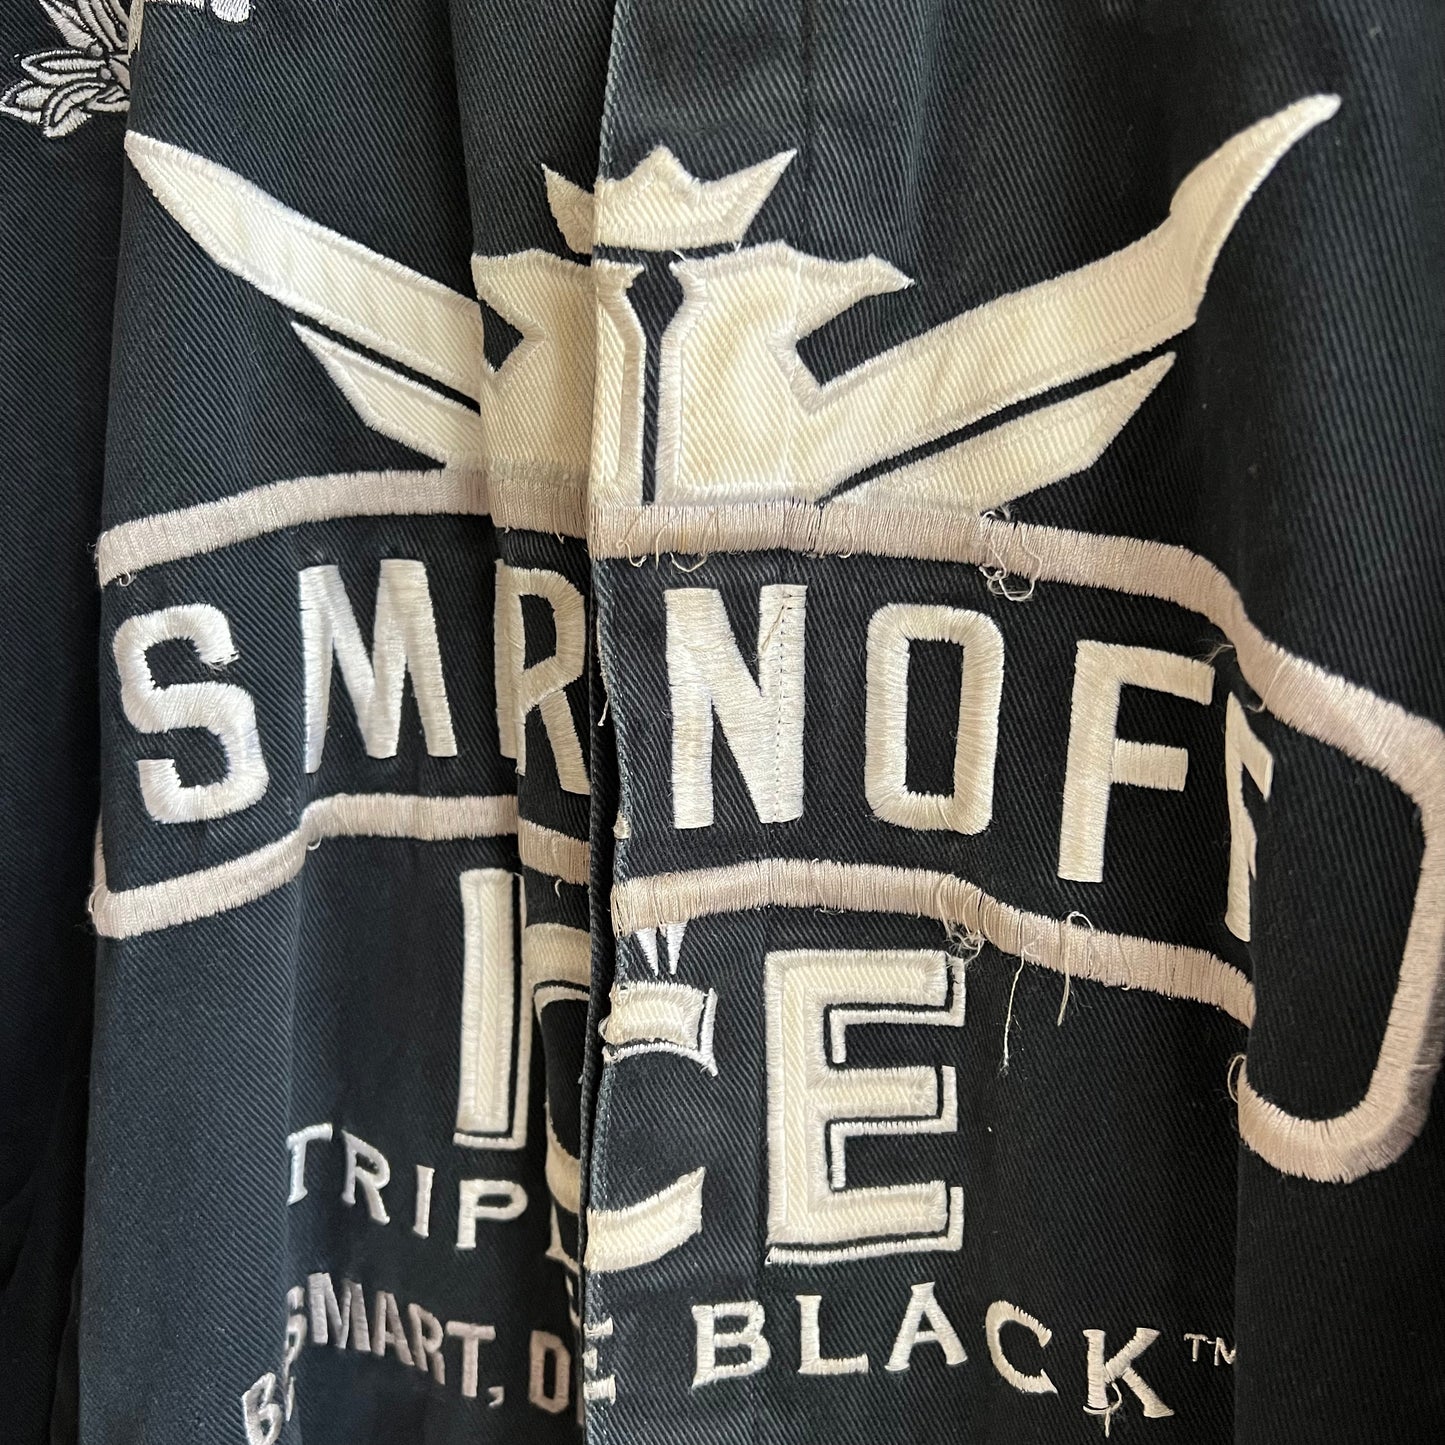 Smirnoff Ice Nascar Jacket